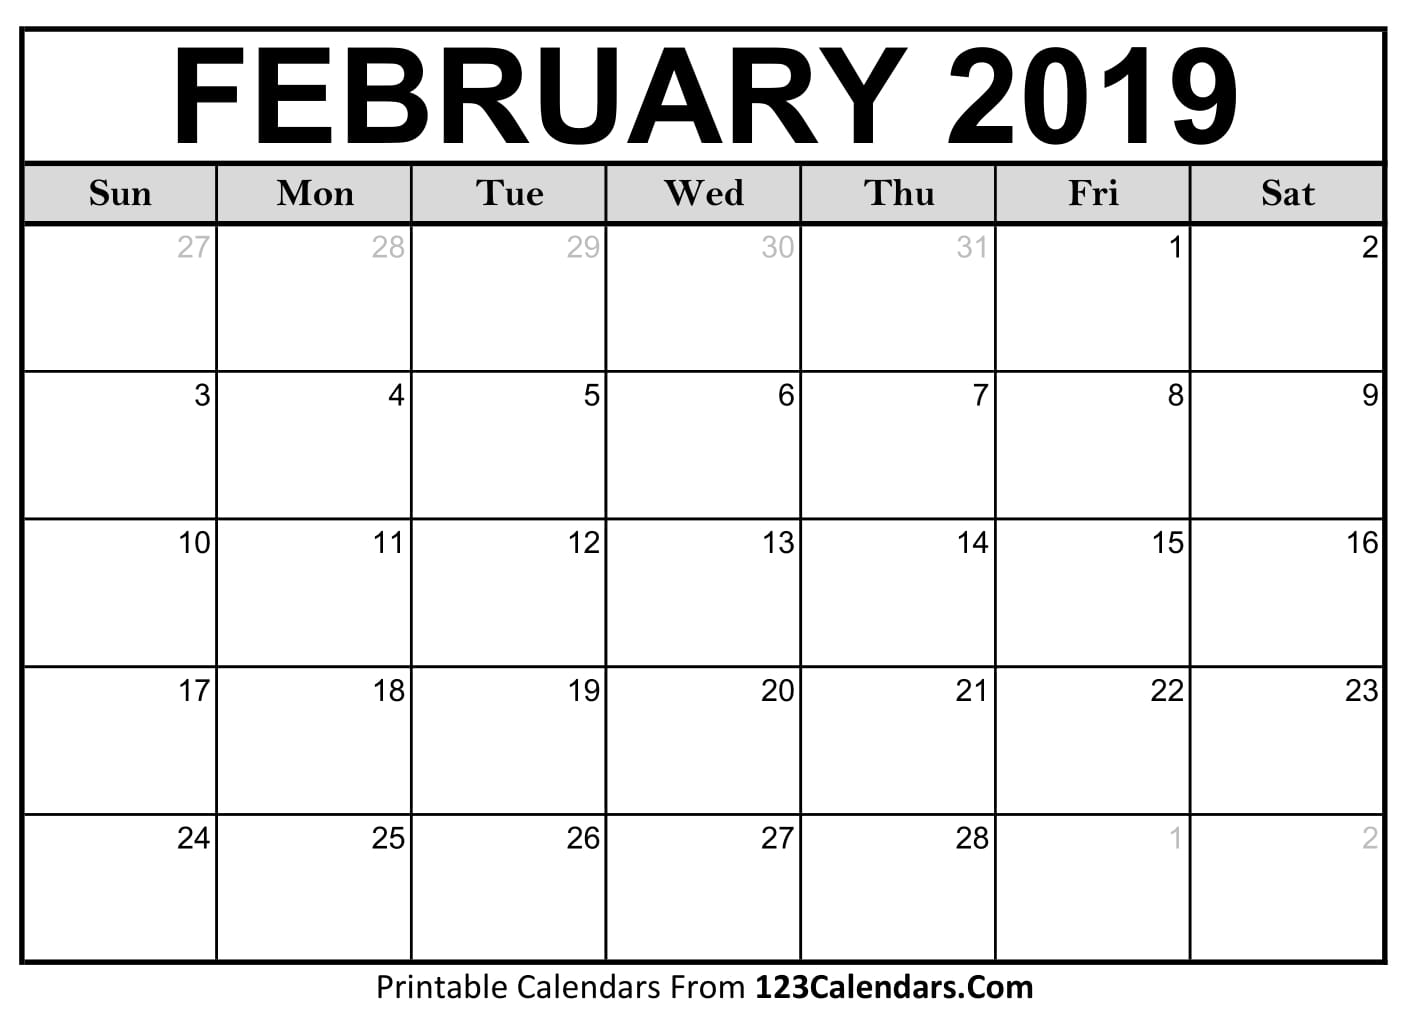 February 2019 Calendar Blank Easily Printable 123Calendars